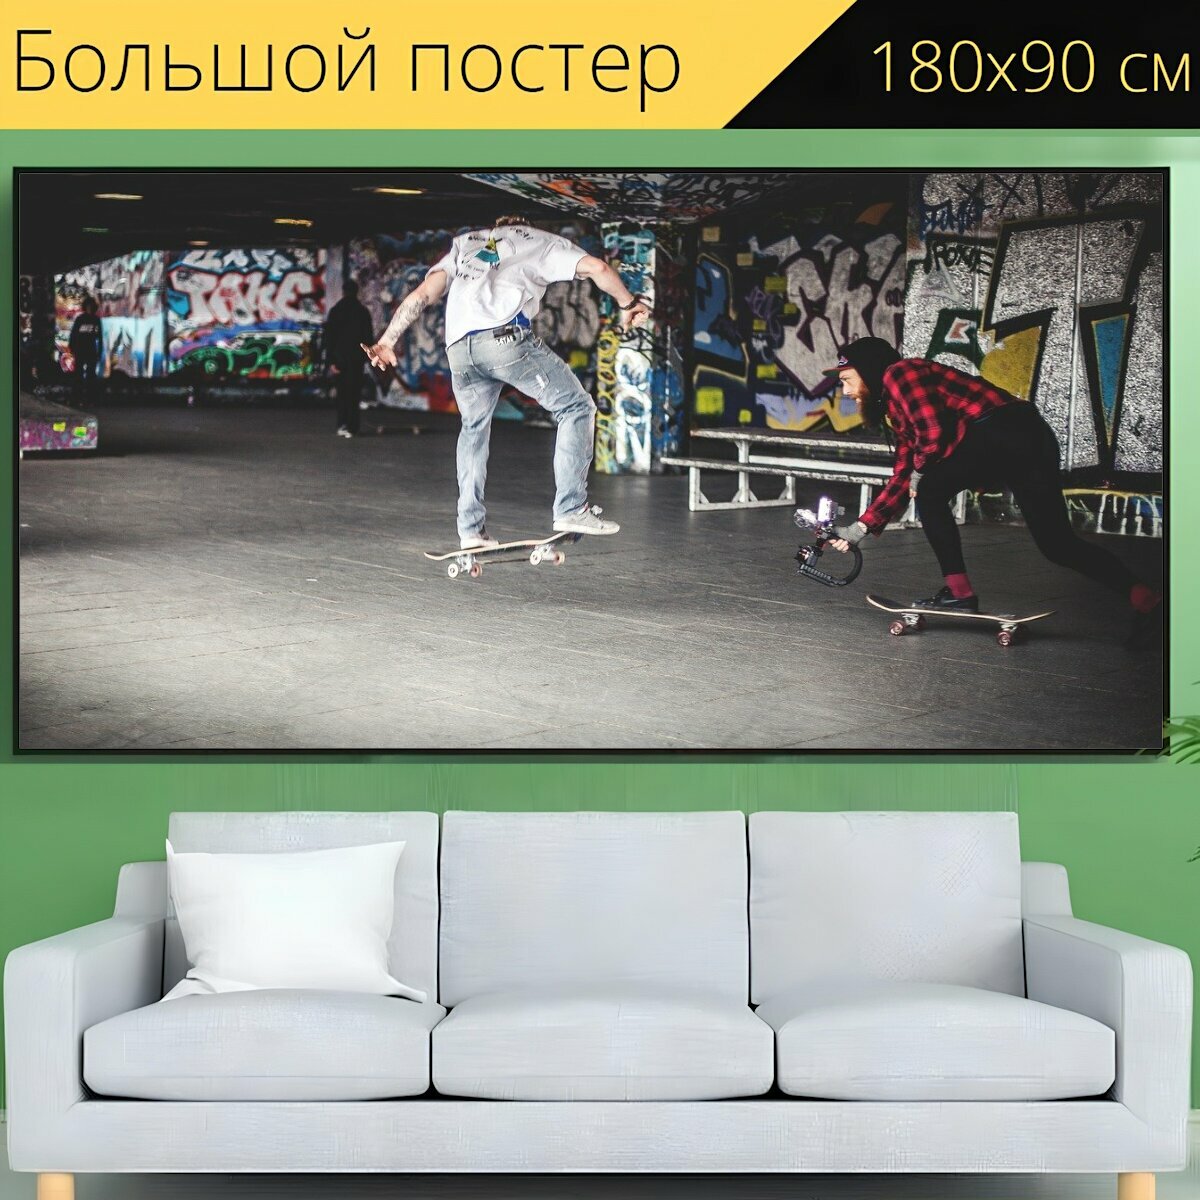 Большой постер "Скейтборд, скейтбординг, граффити" 180 x 90 см. для интерьера